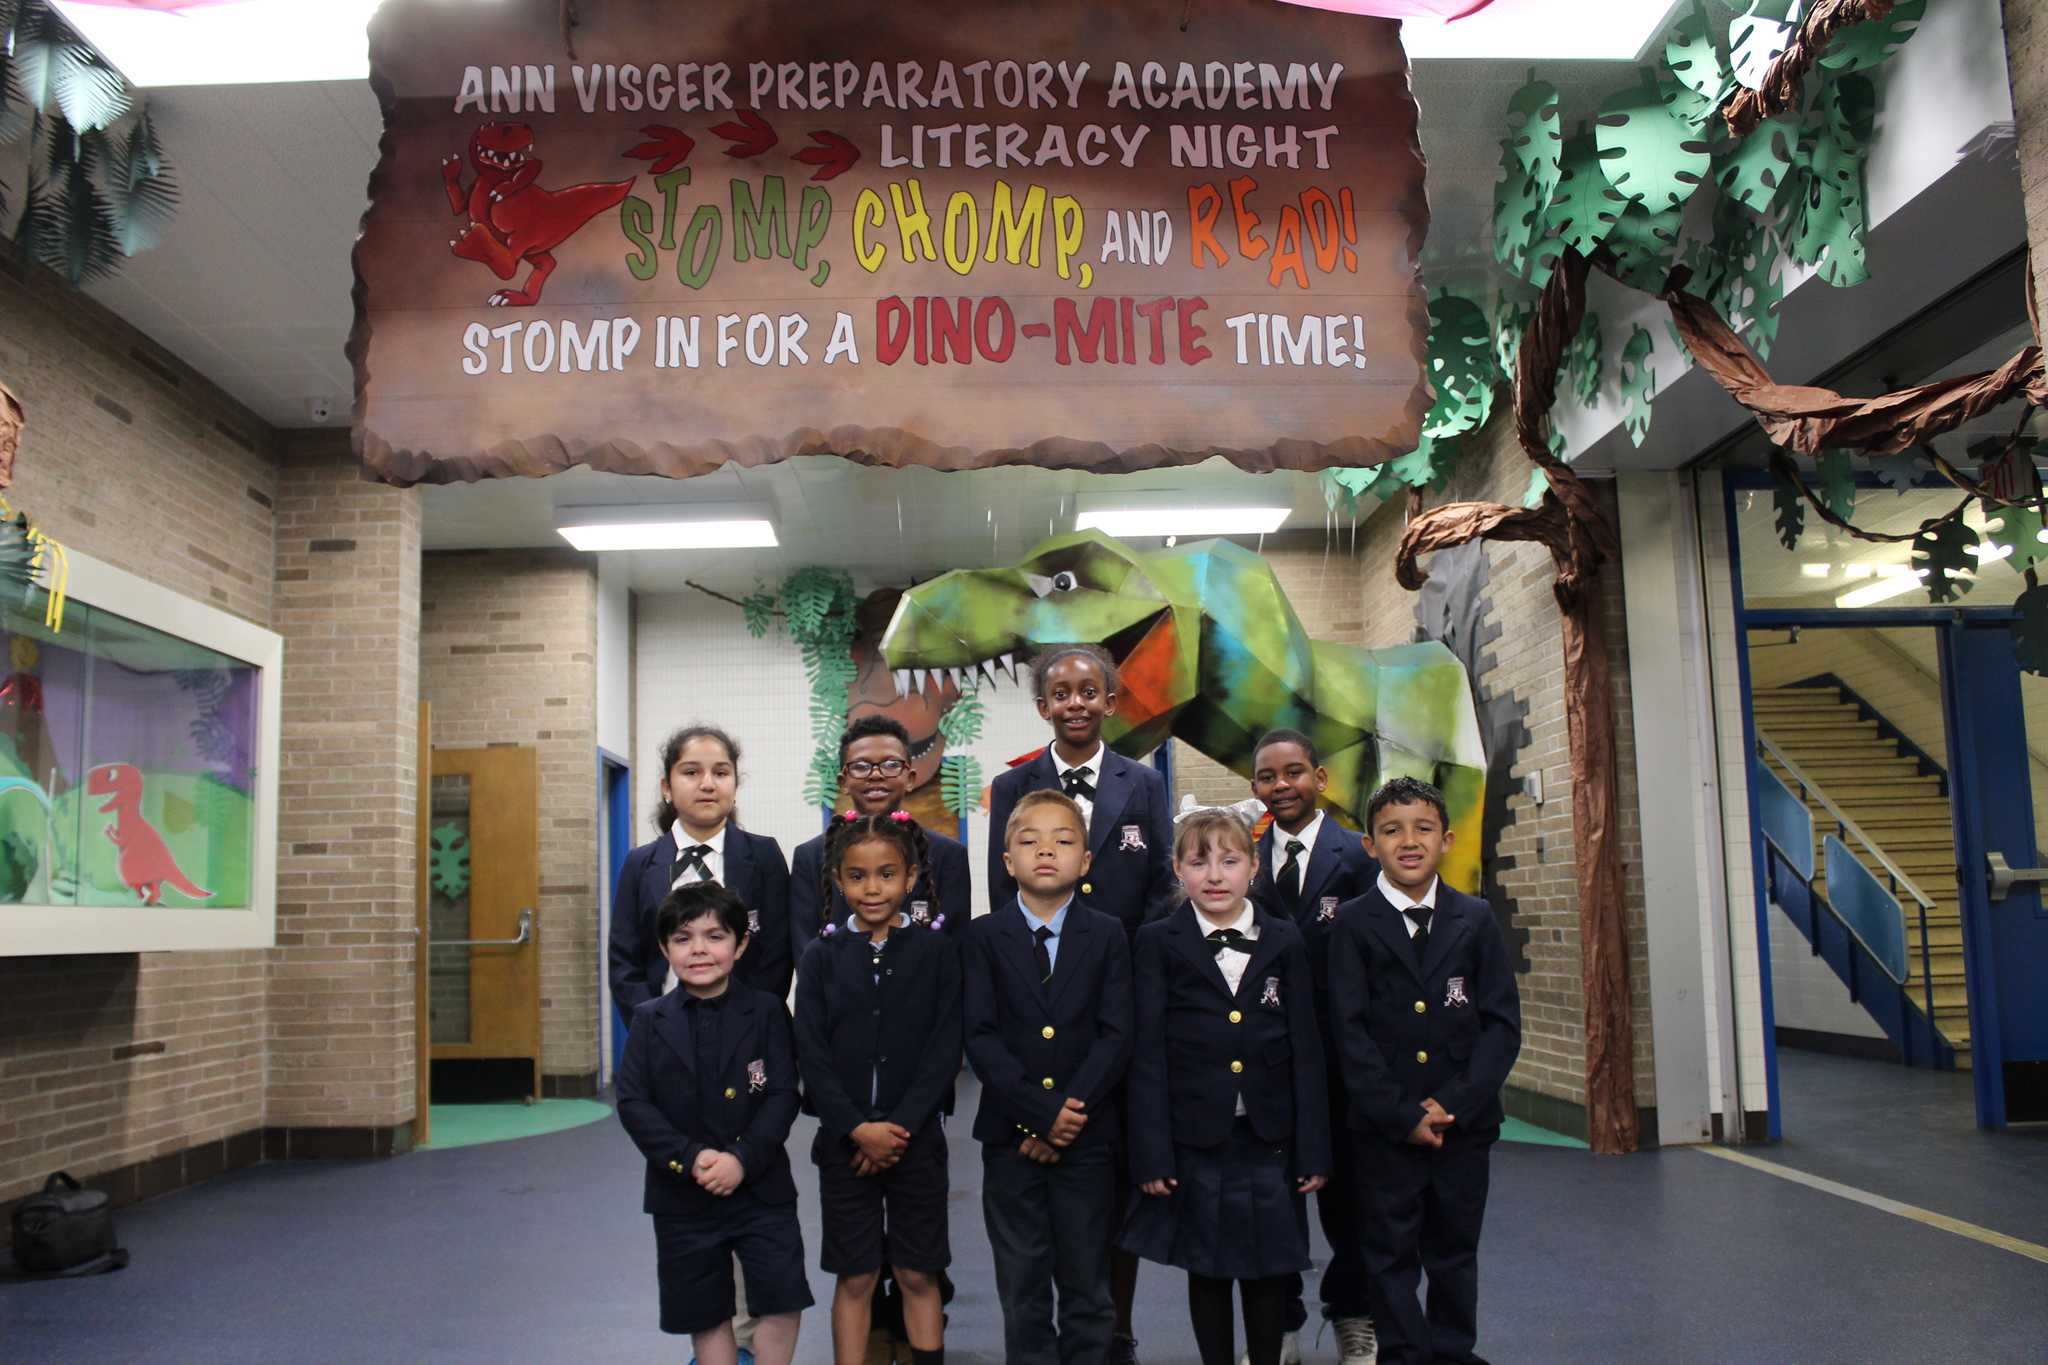 Welcome to Ann Visger Preparatory Academy